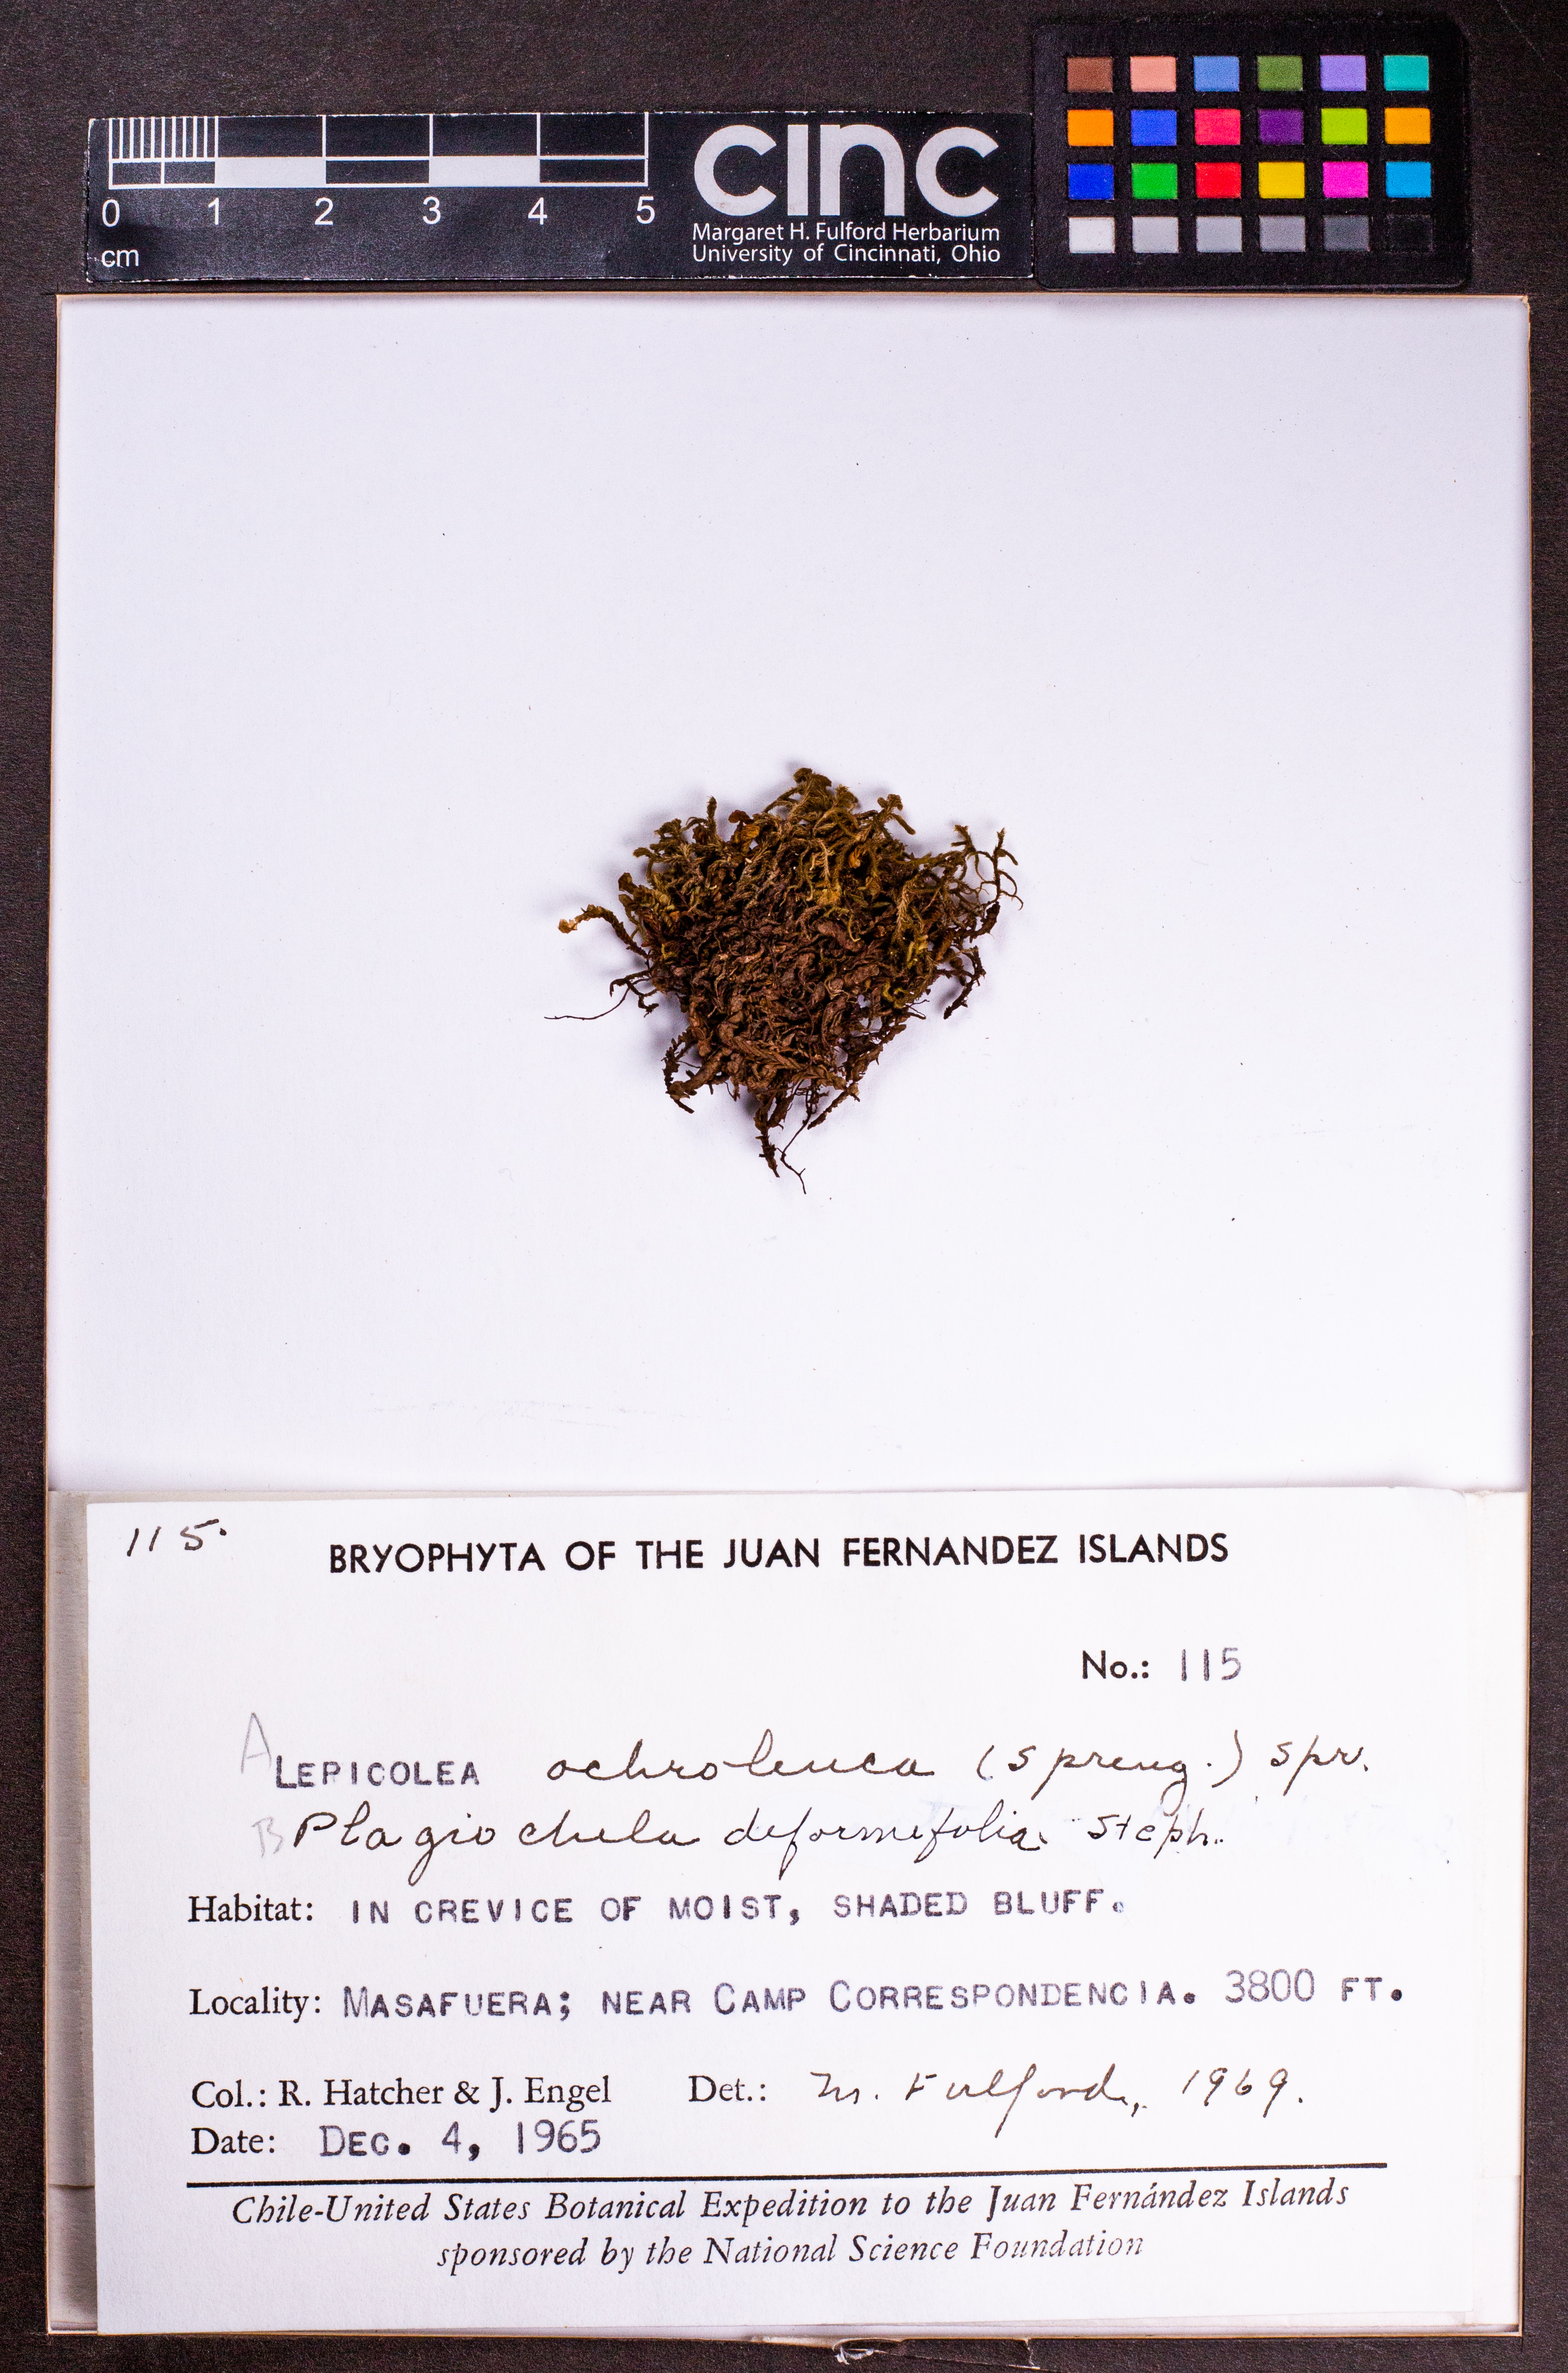 Plagiochila angulata image